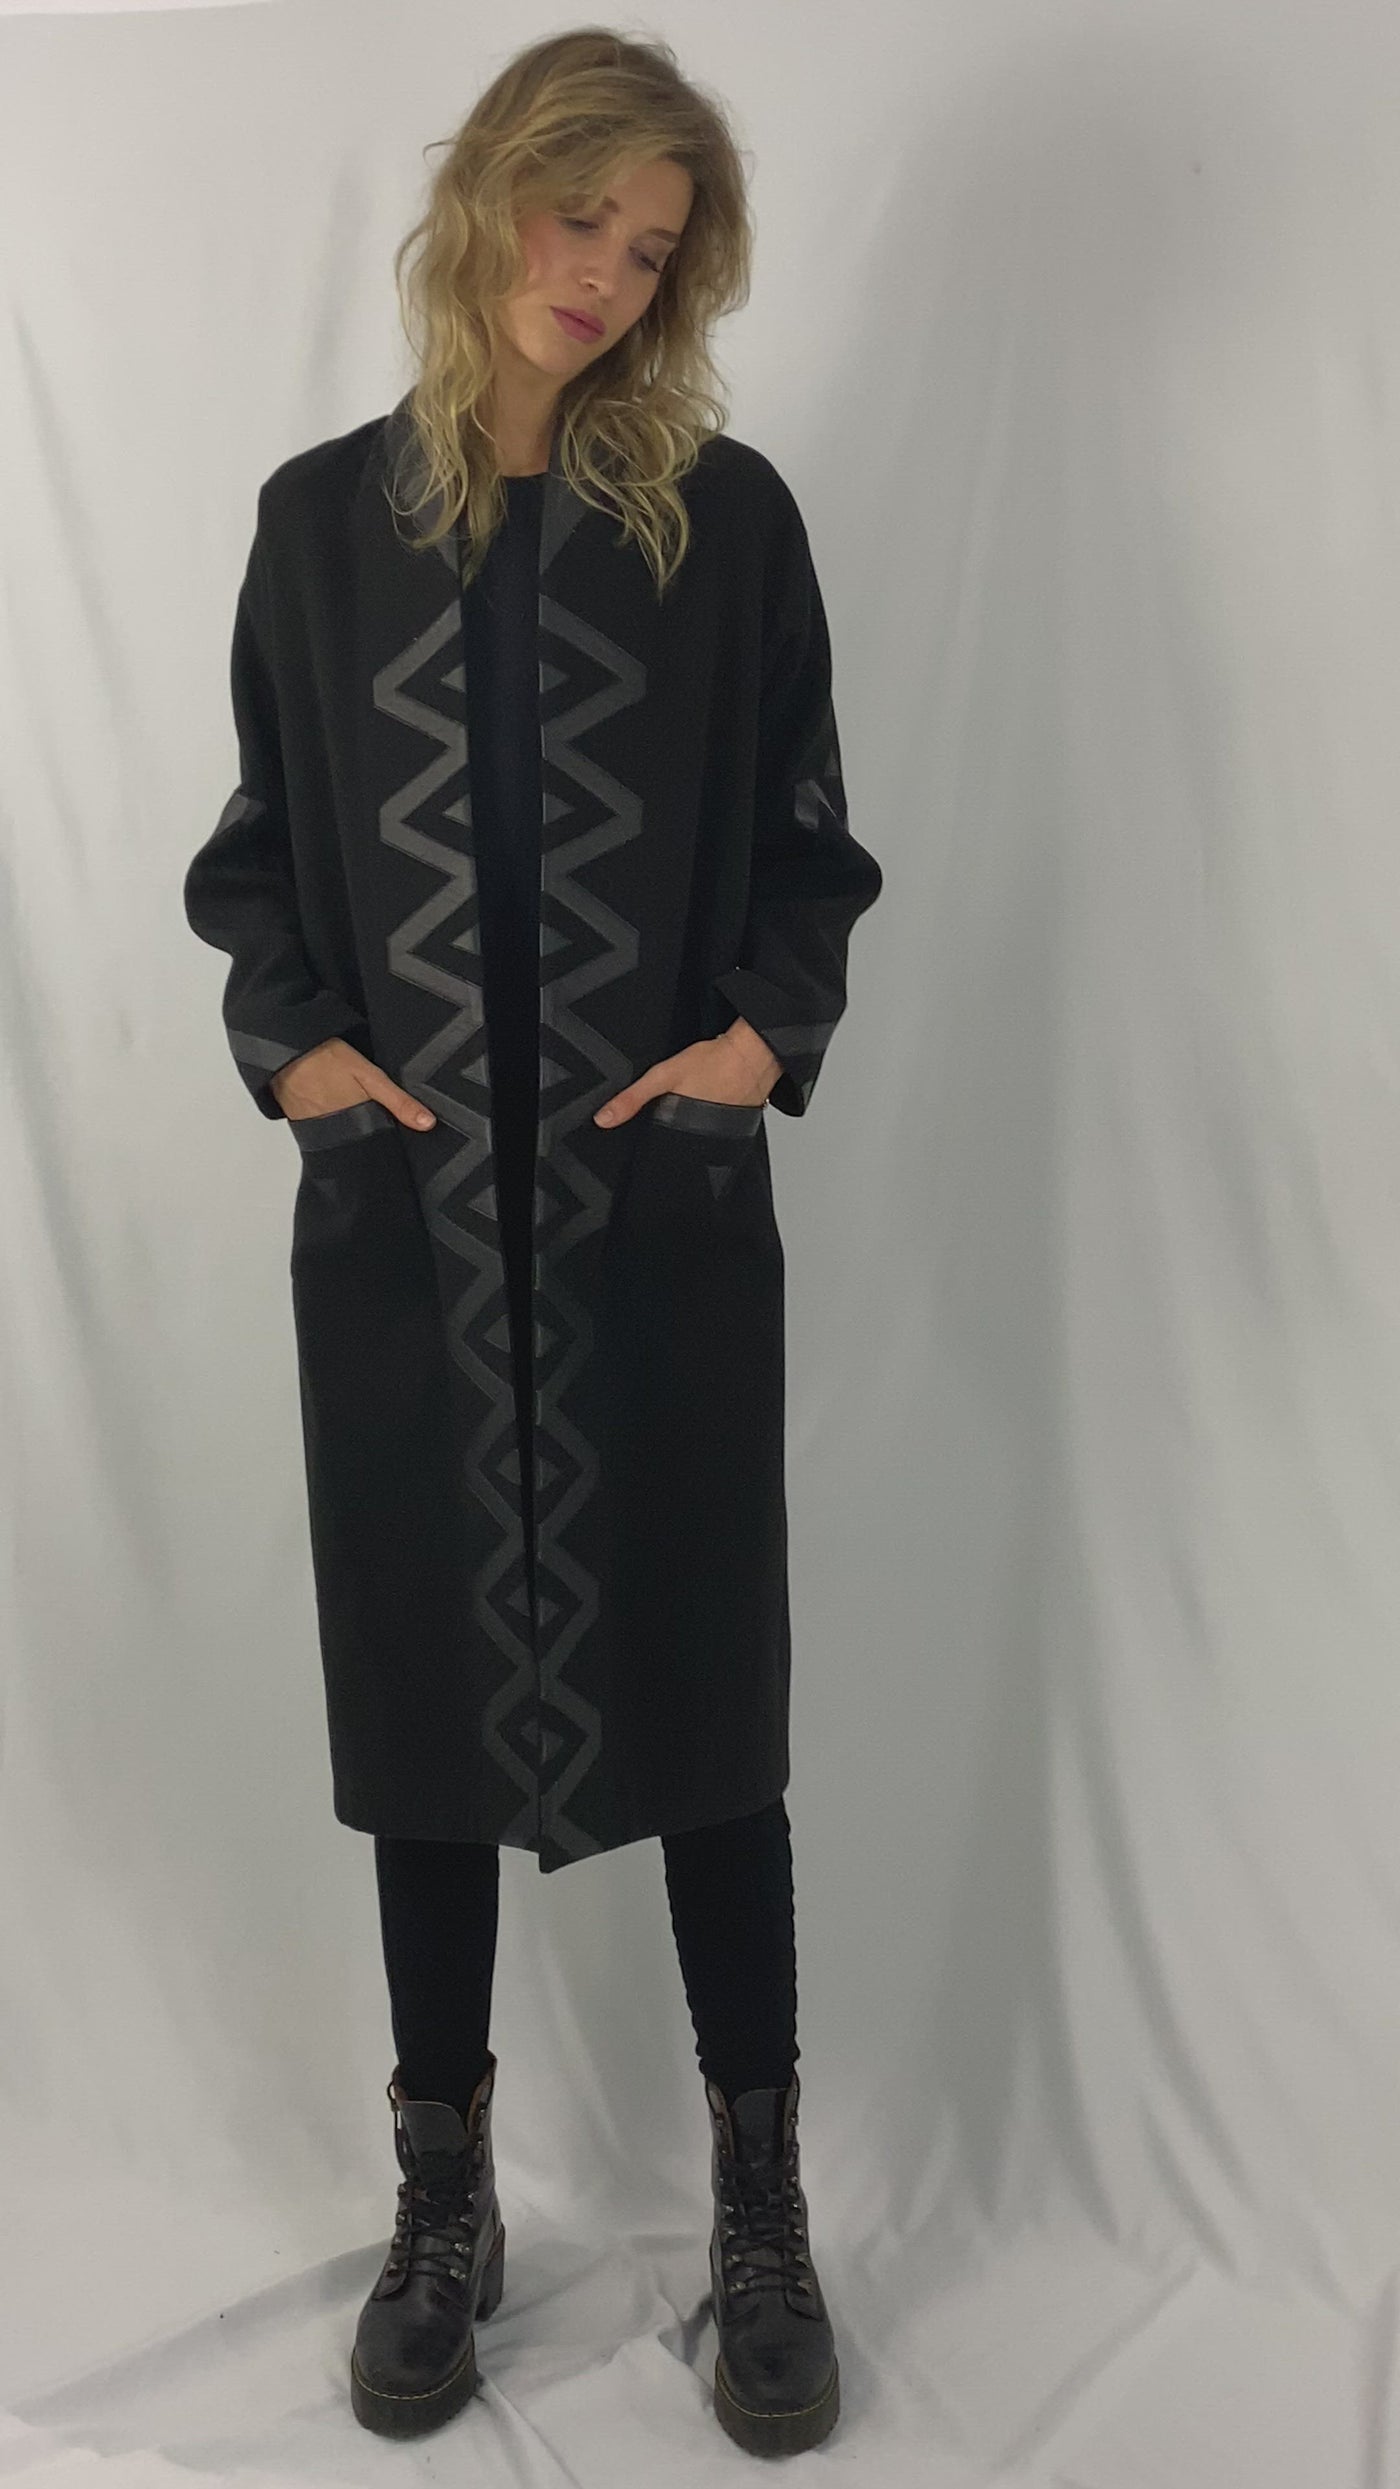 Womens Black Wool Maxi Coat from Love Khaos Streetwear brand.